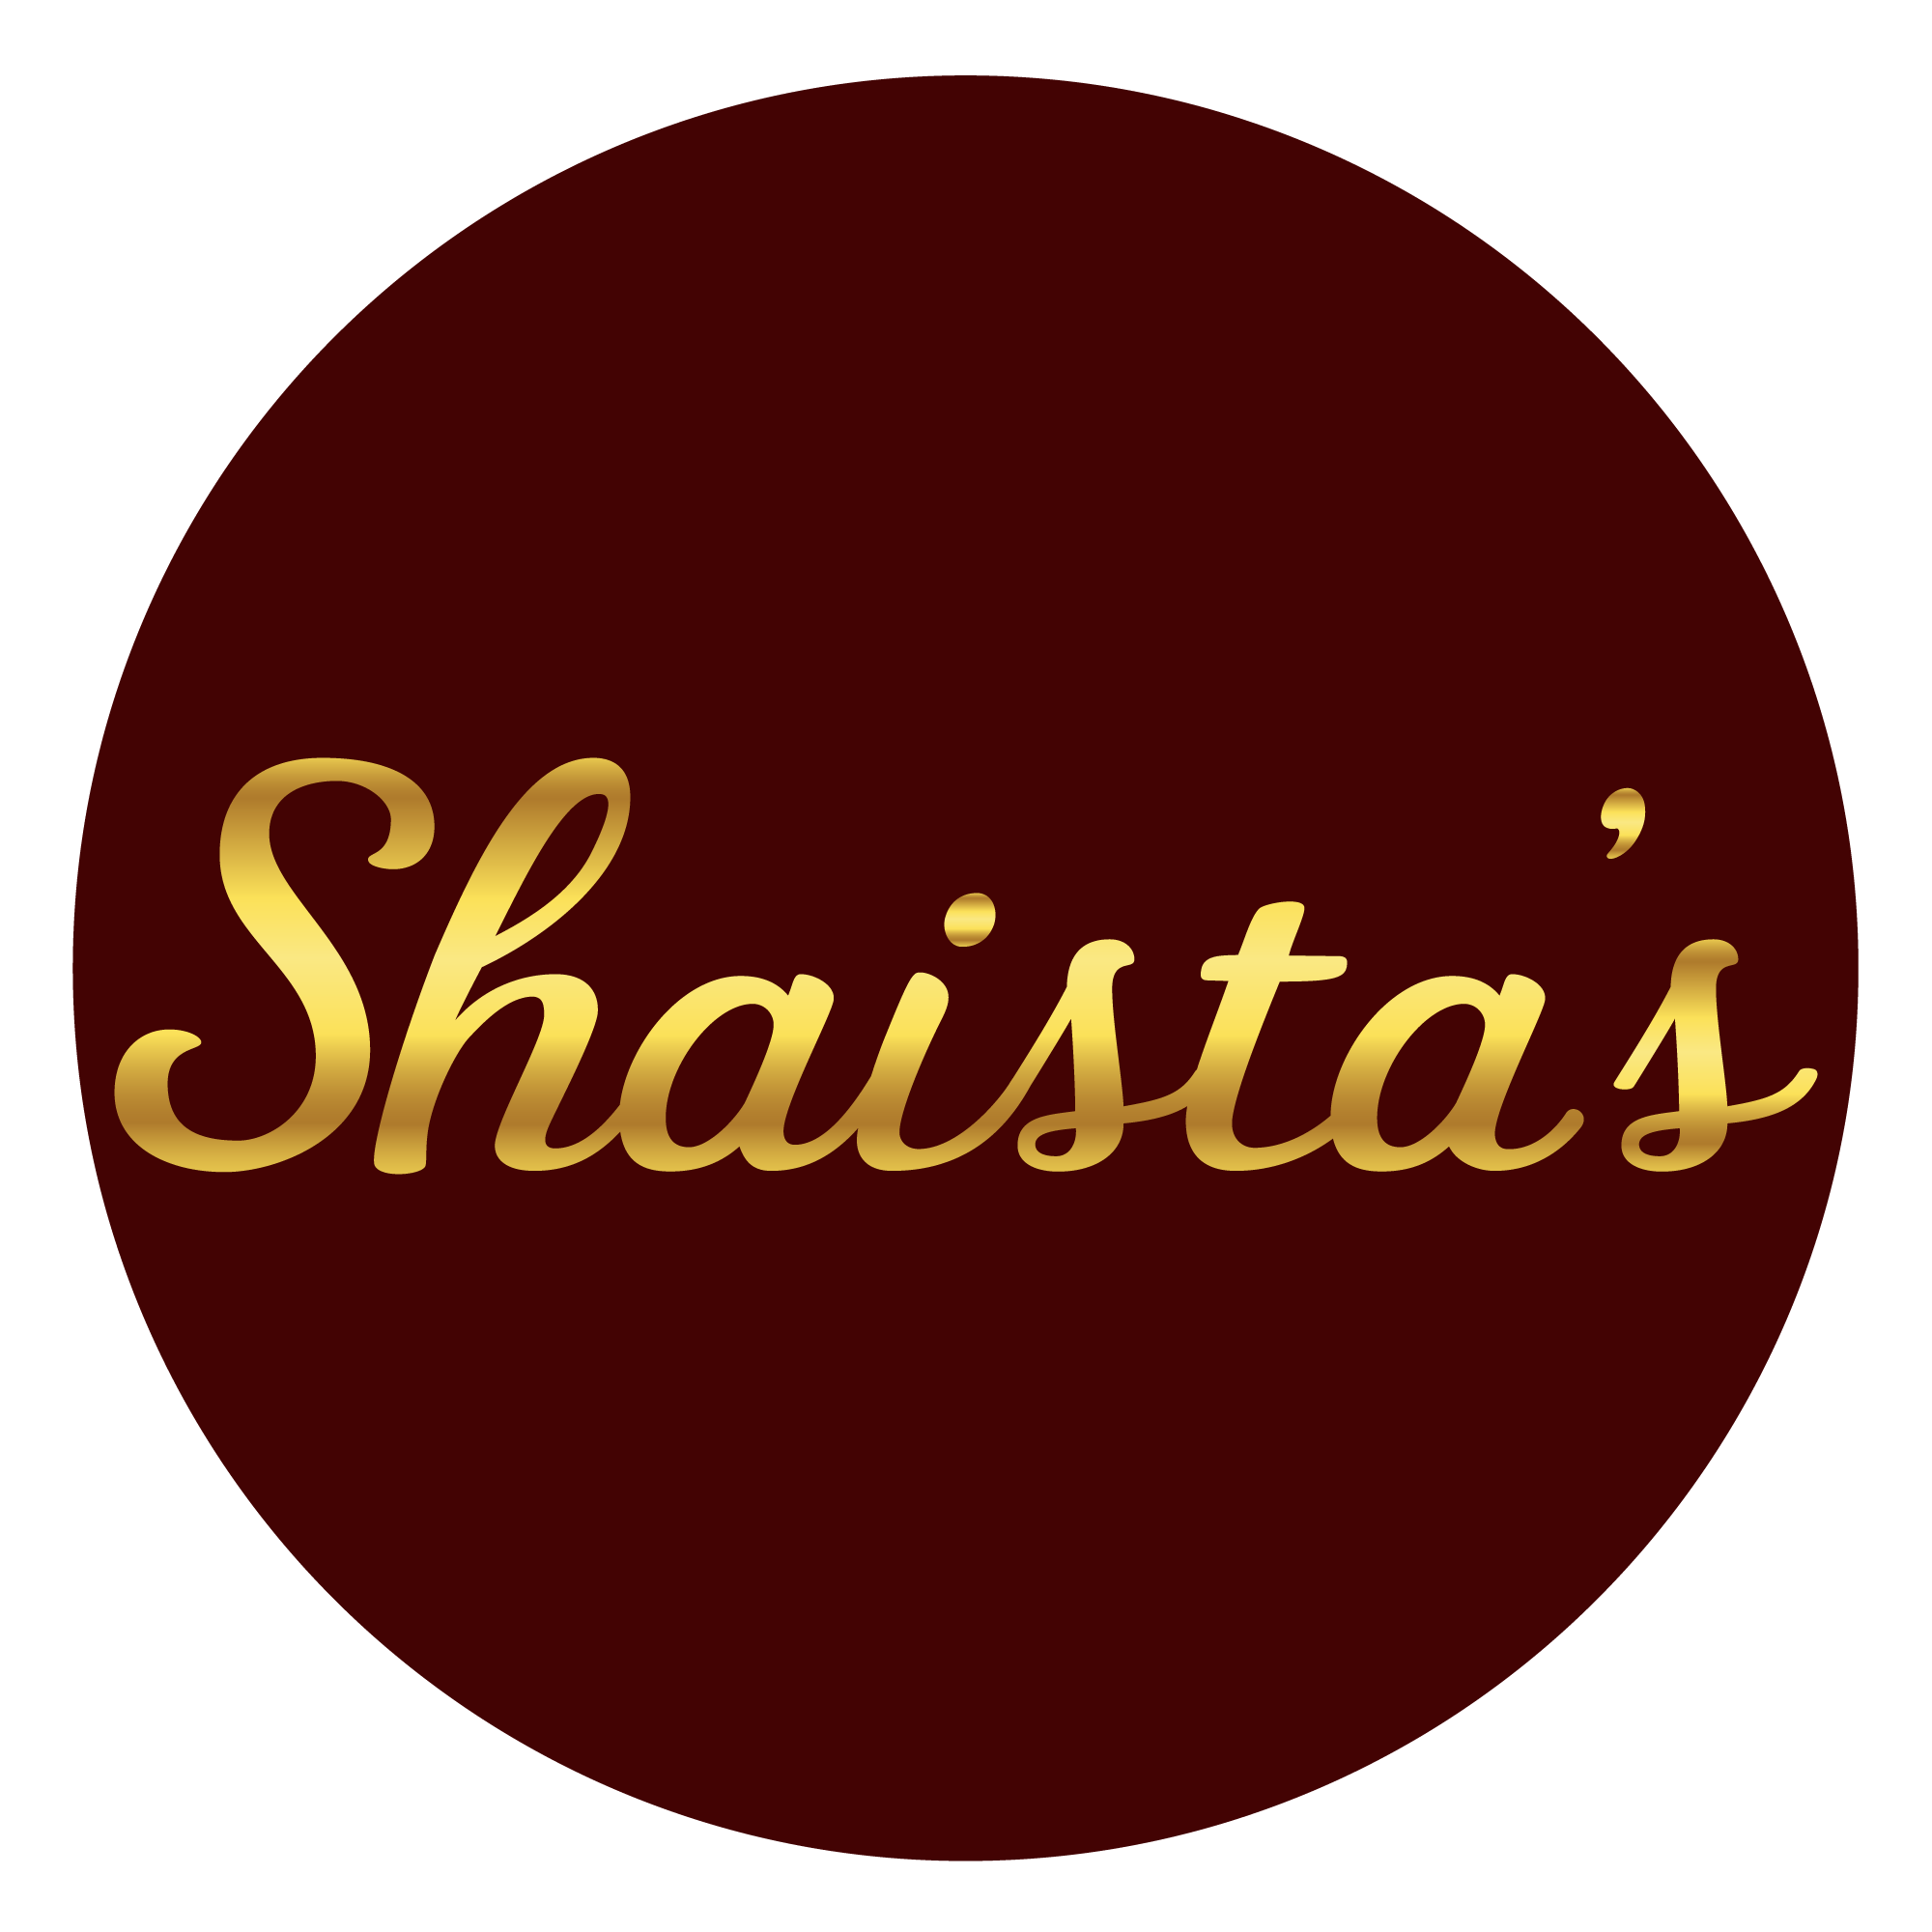 Shaista’s